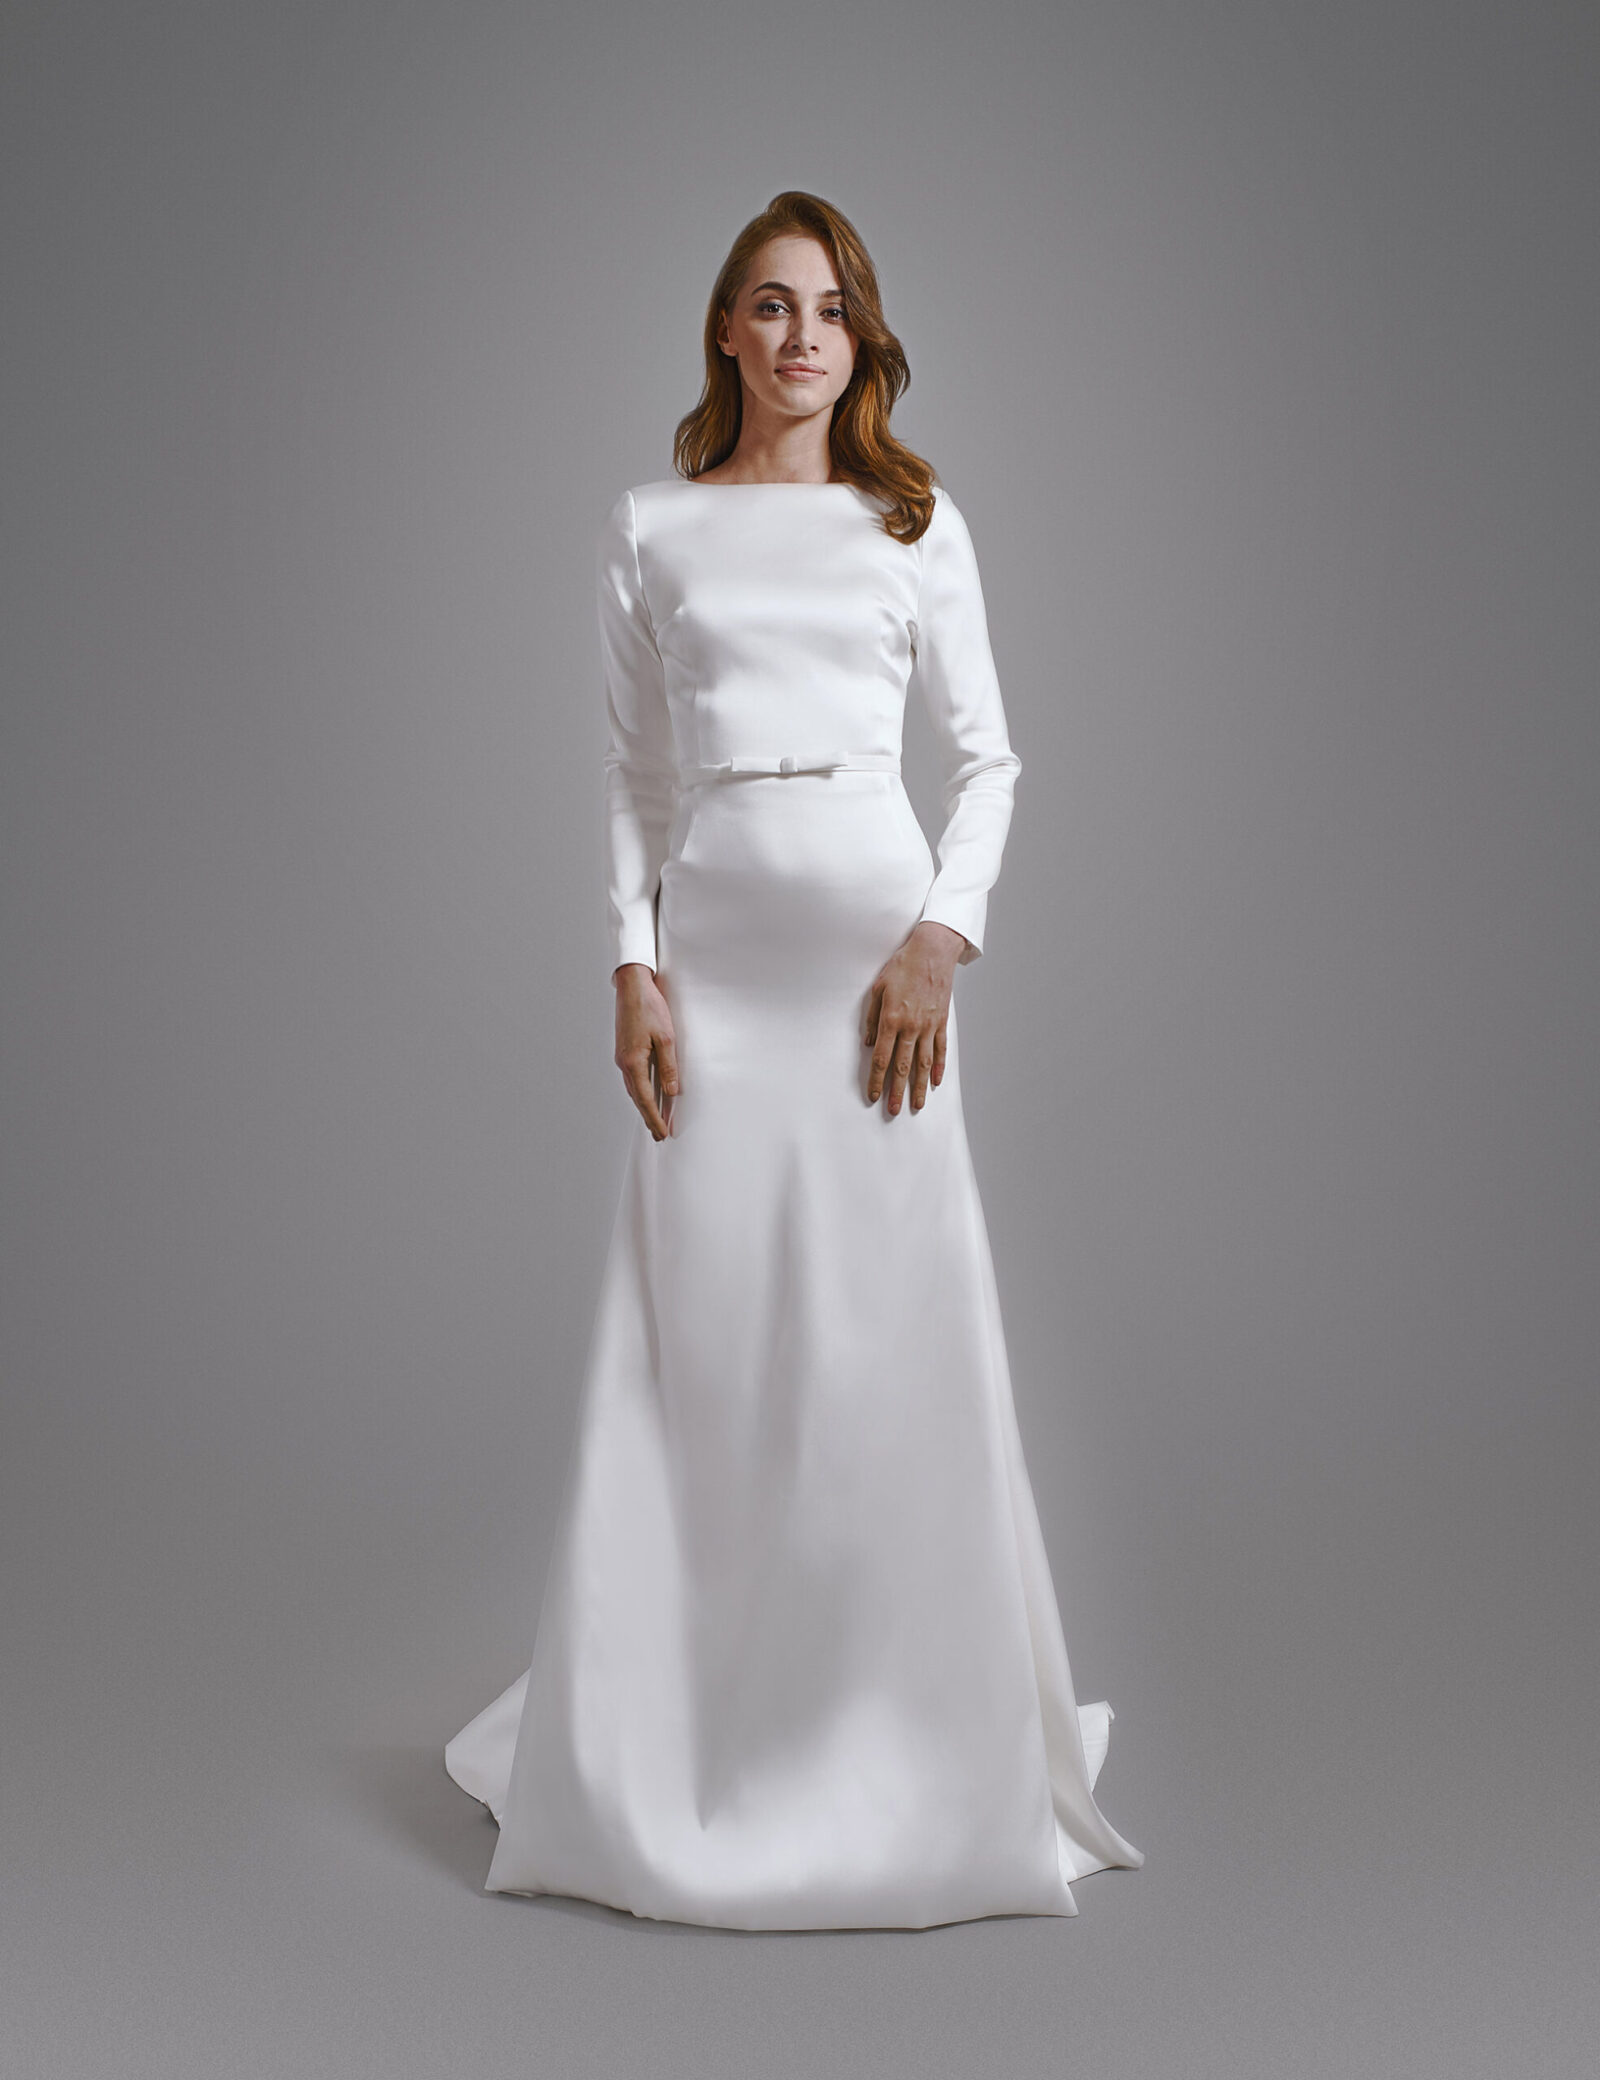 Simple elegant minimal wedding dress BHARB-MAIDEN-BH2020-0015-001-tall - MAIDEN menyasszonyi ruha